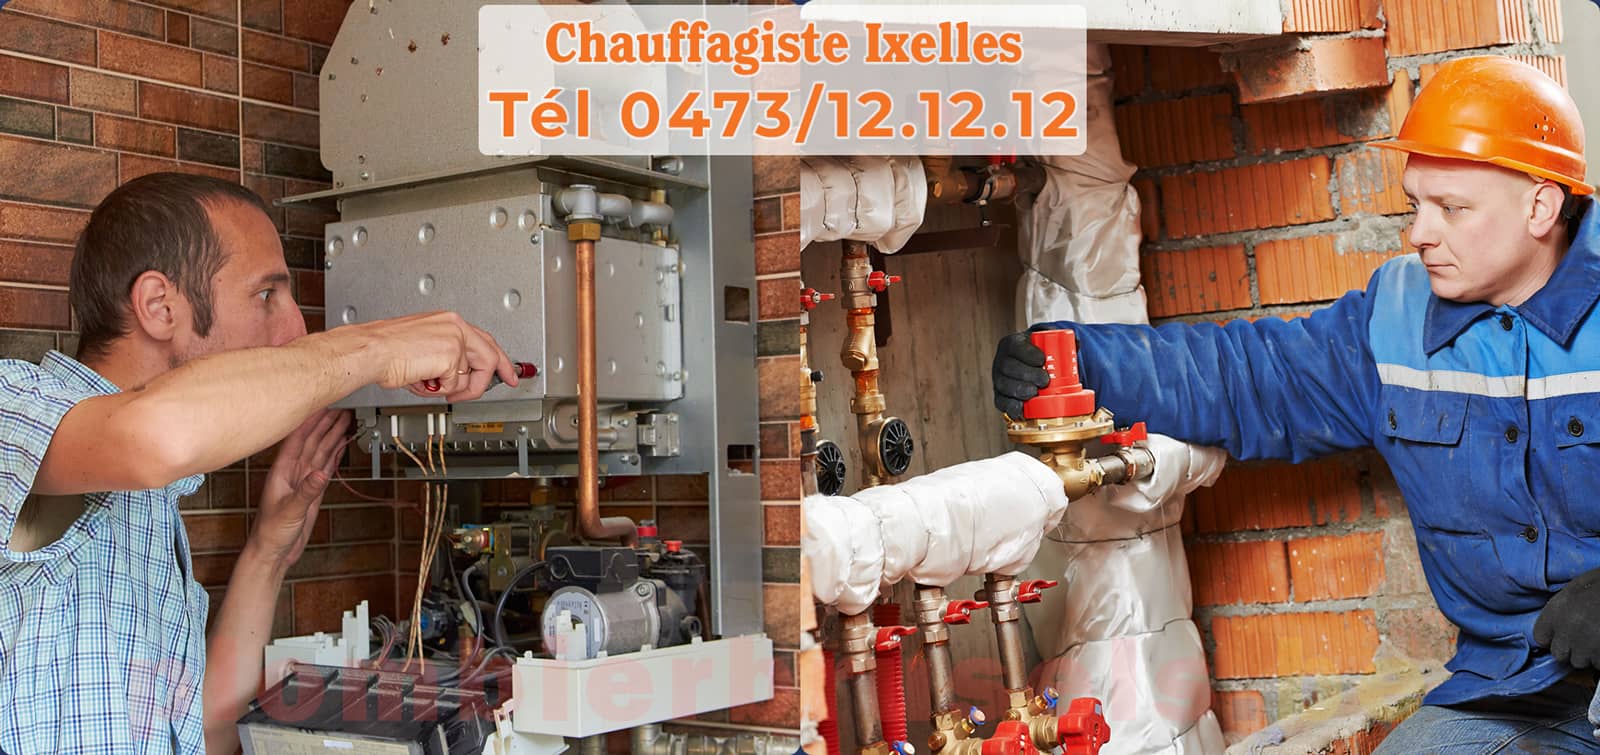 Chauffagiste Ixelles service de Chauffage tél 0473/12.12.12